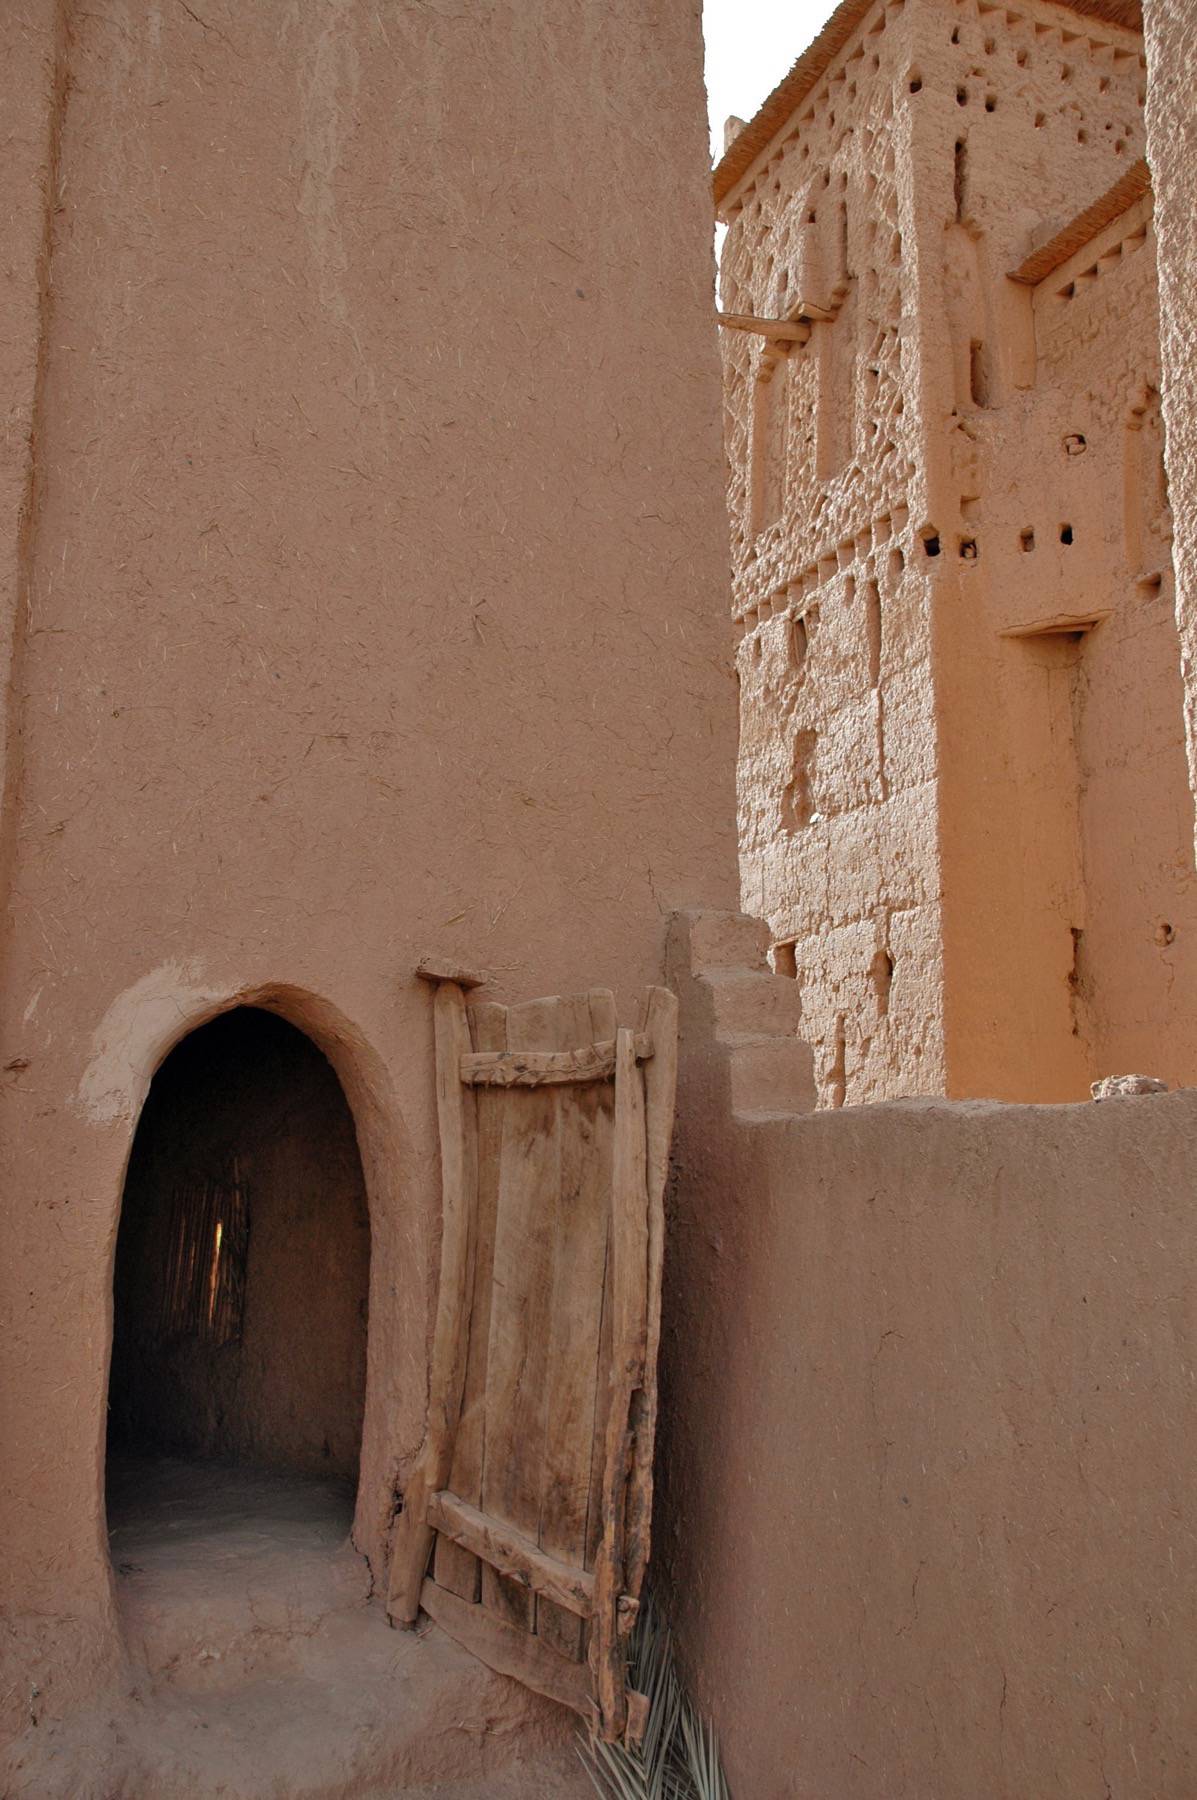 Kasbah Amridil, Skourra, Ouarzazate, Morocco.